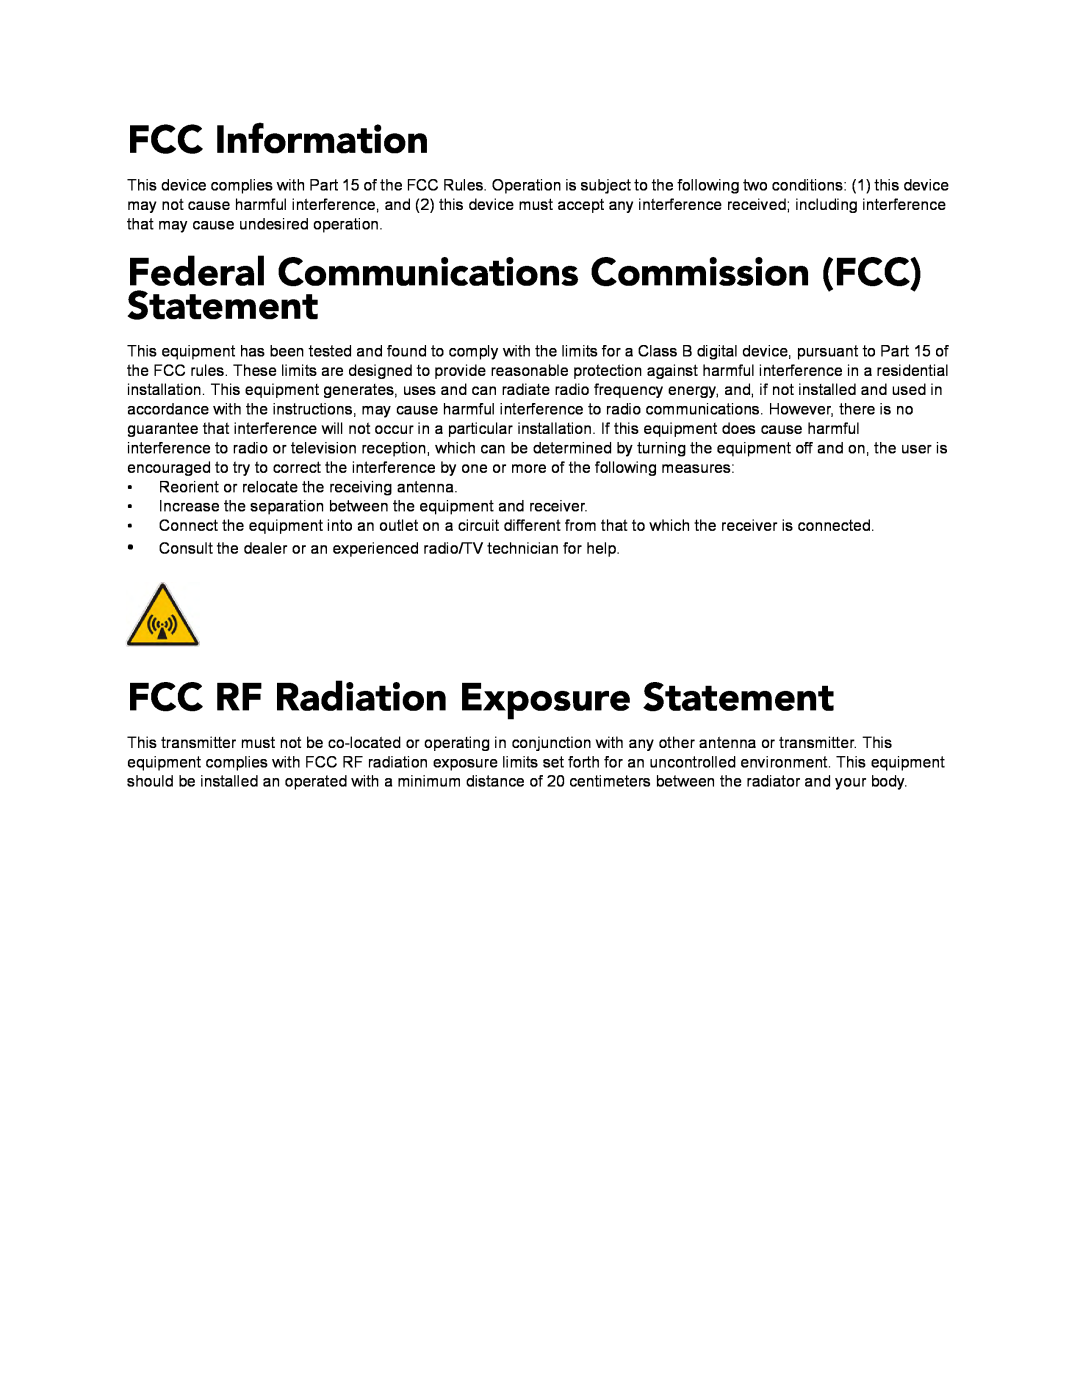 AMX MVP-KS manual FCC Information, Federal Communications Commission FCC Statement, FCC RF Radiation Exposure Statement 